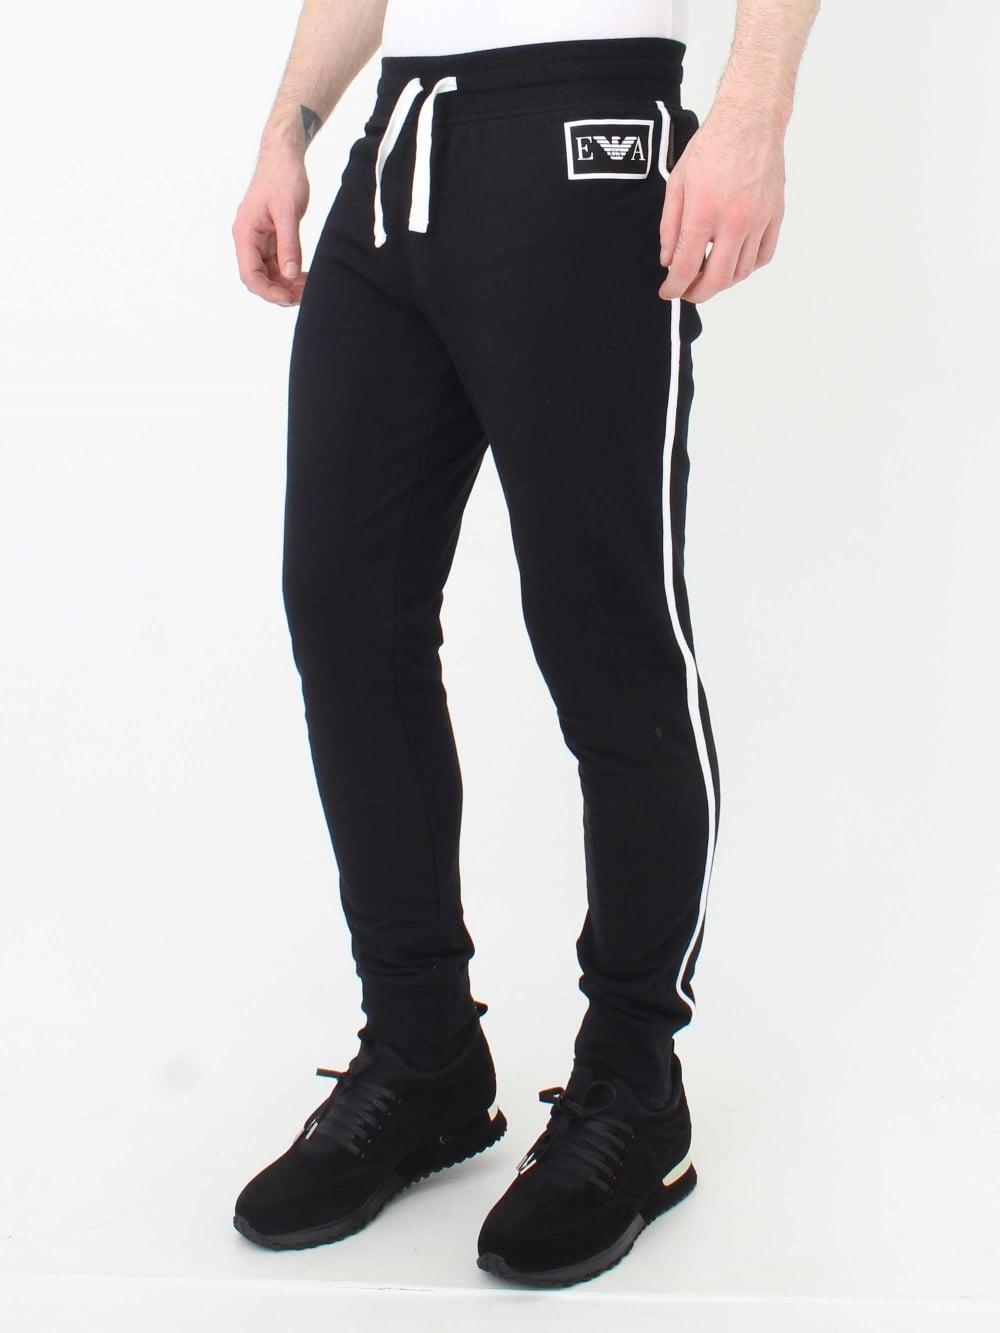 Pants Logo - Emporio Armani Loungewear Logo Pants in Black | Northern Threads